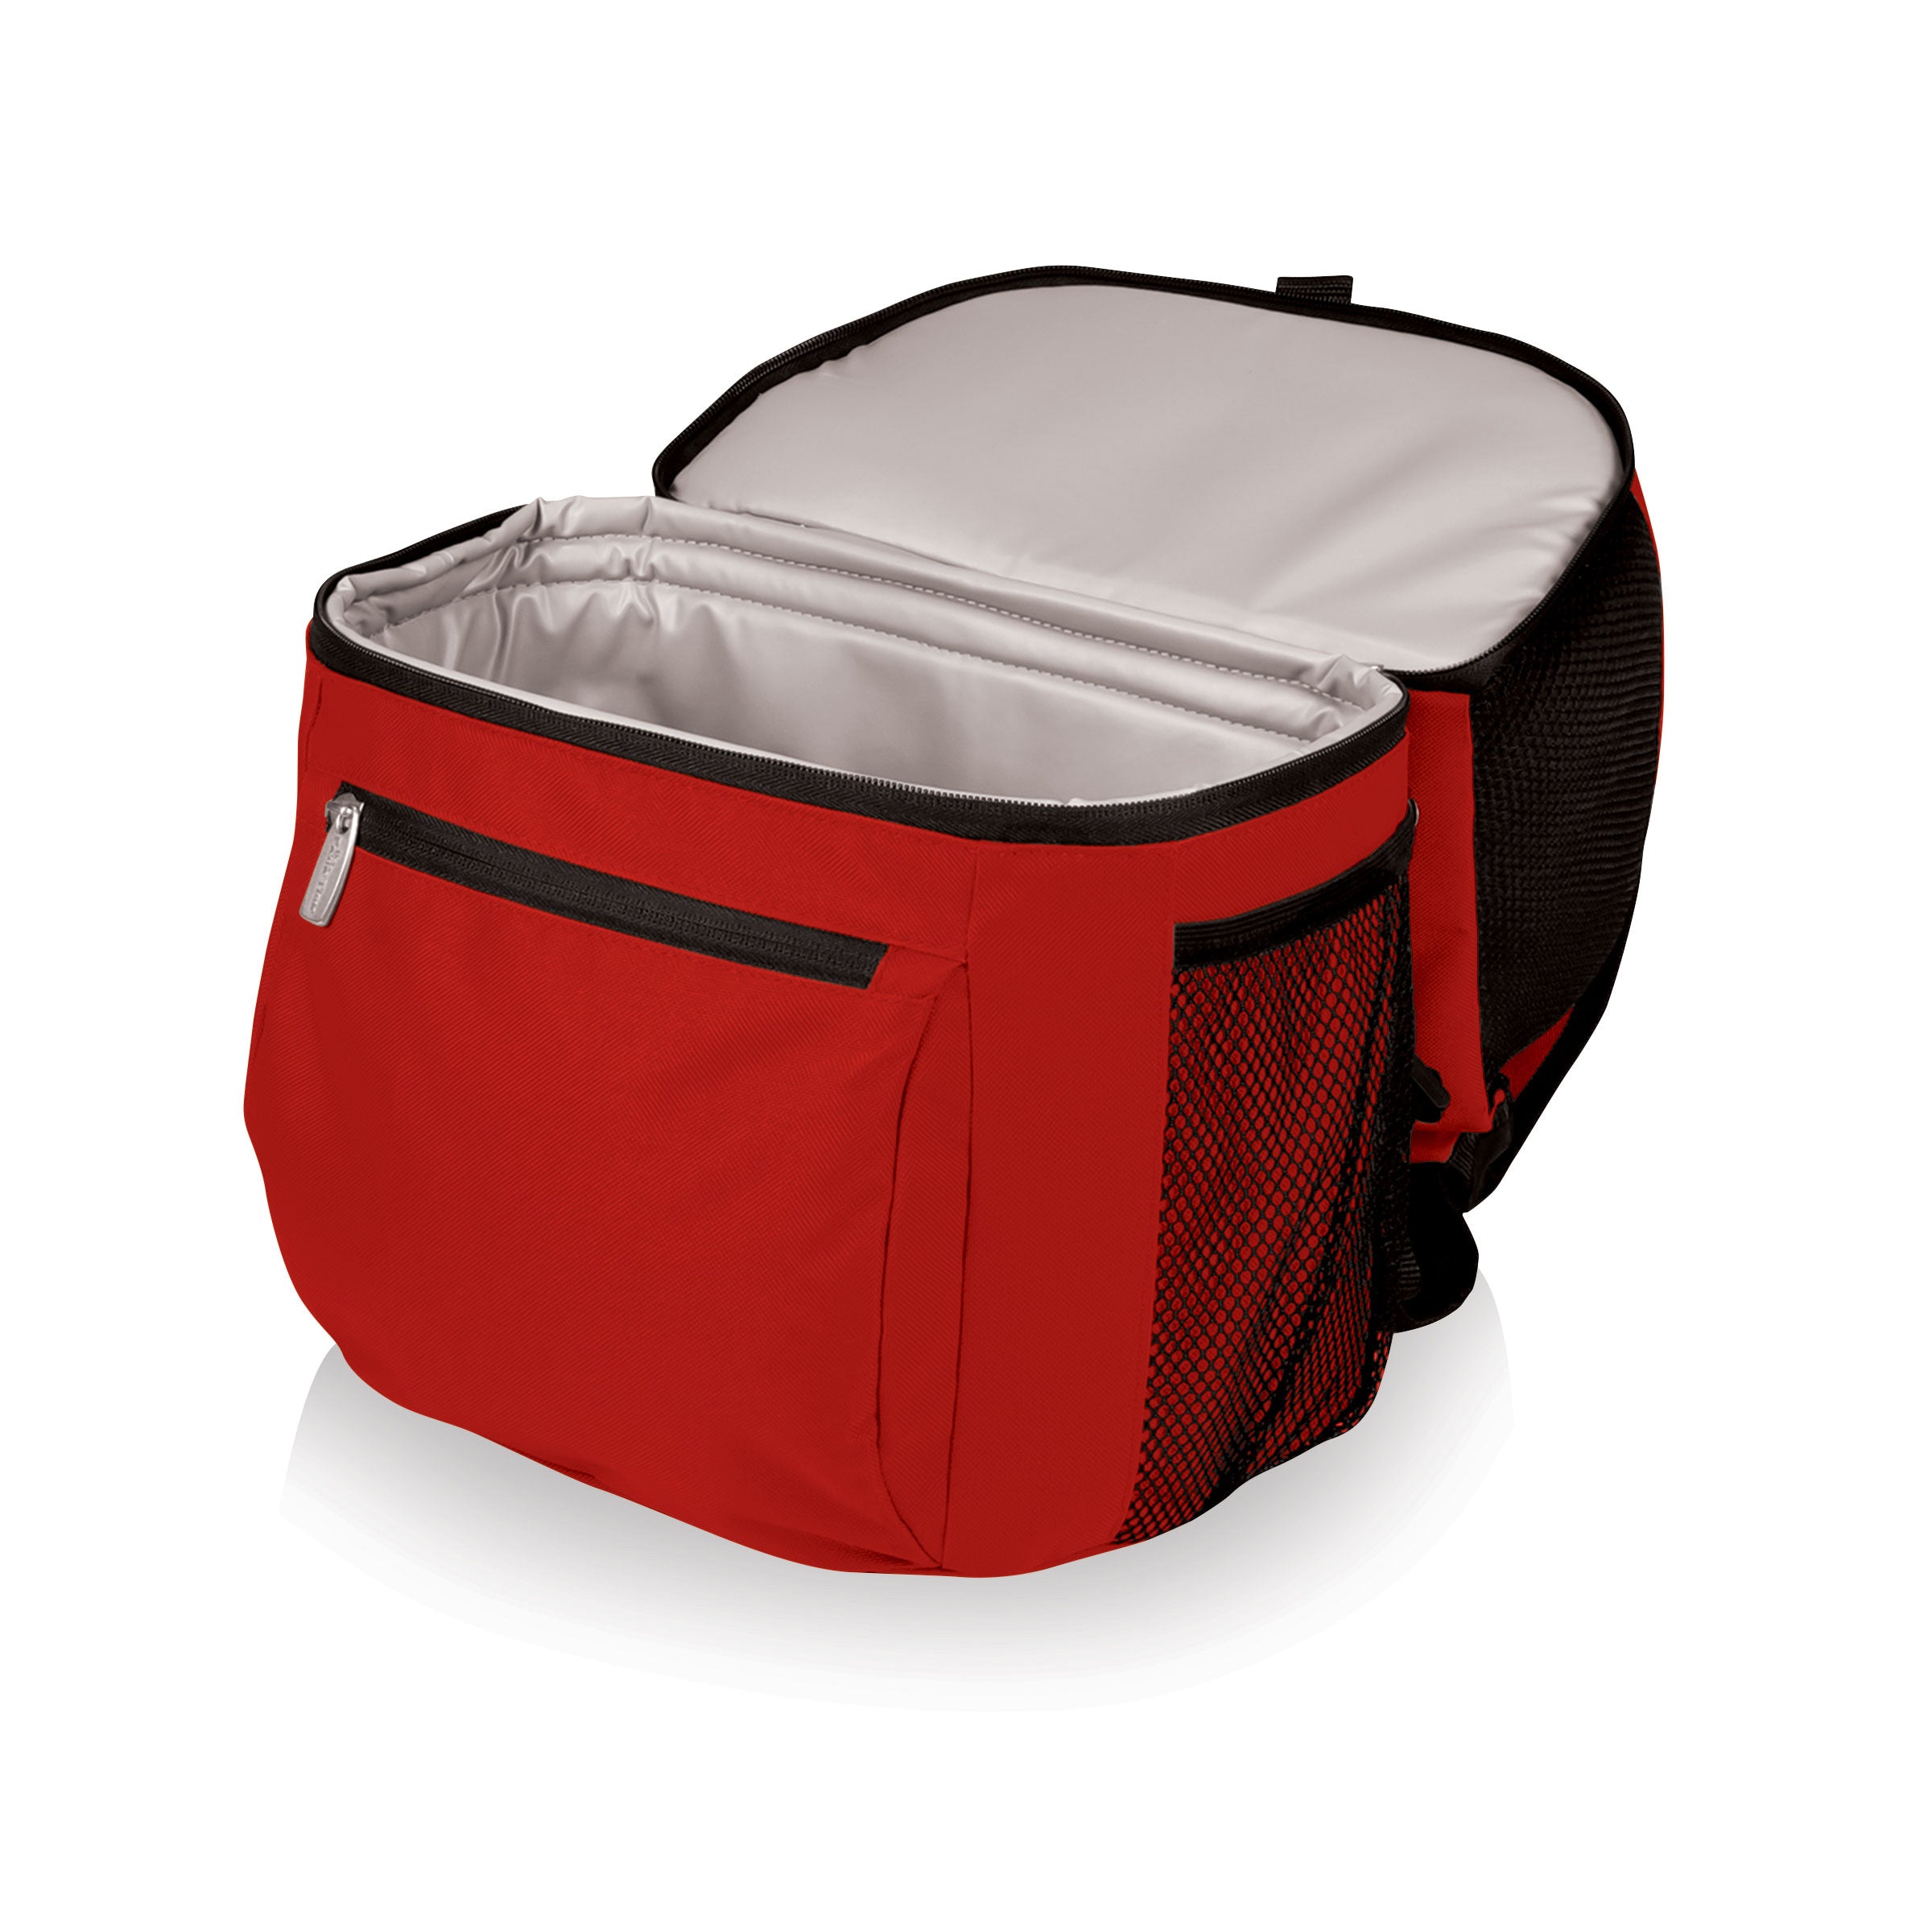 Indiana Hoosiers - Zuma Backpack Cooler